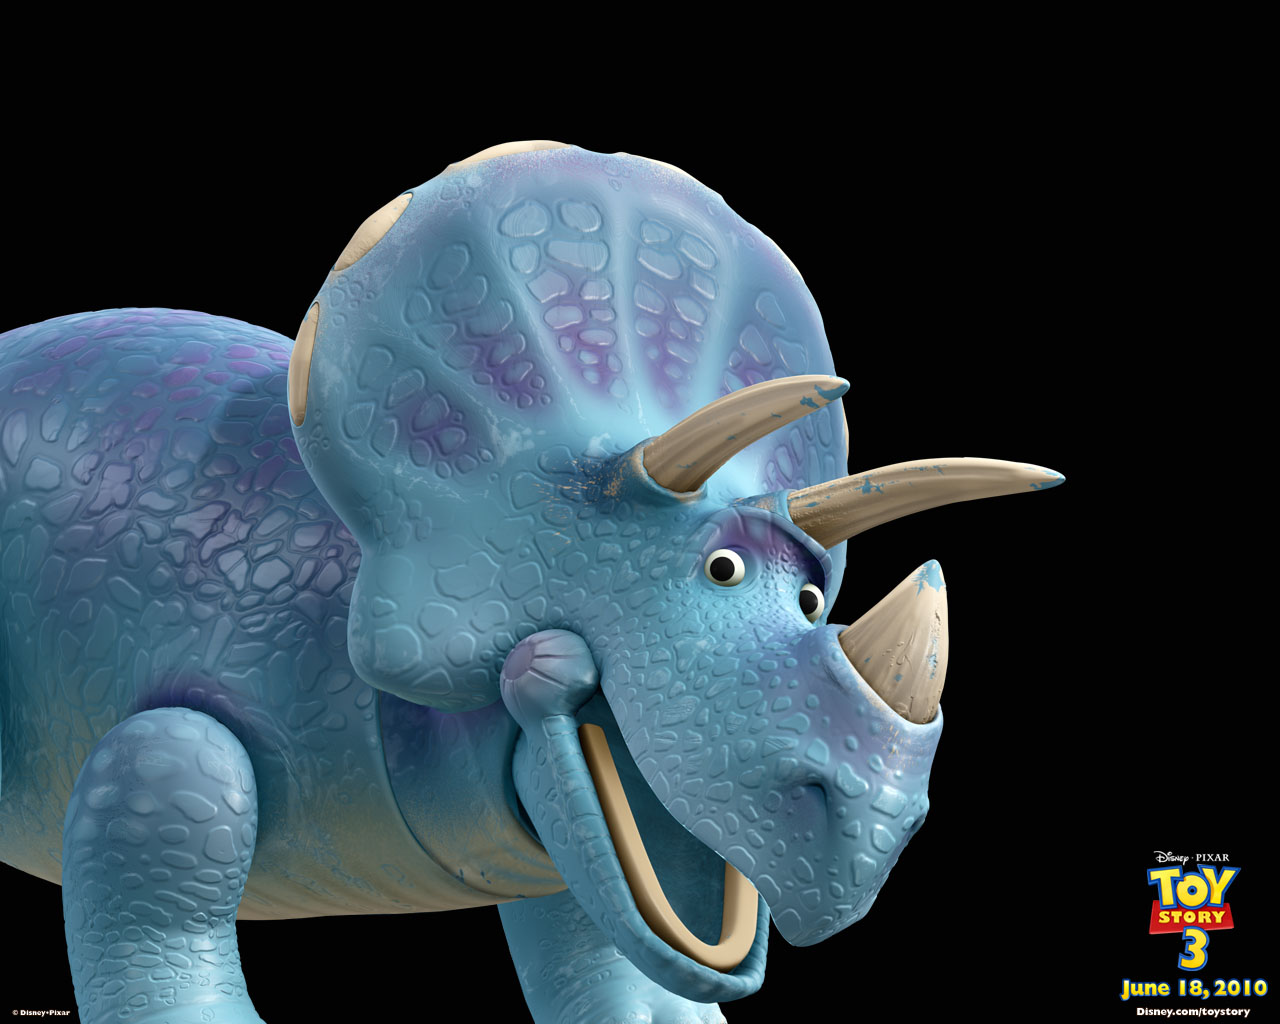 "Toy Story 3" desktop wallpaper number 15 (1280 x 1024 pixels)